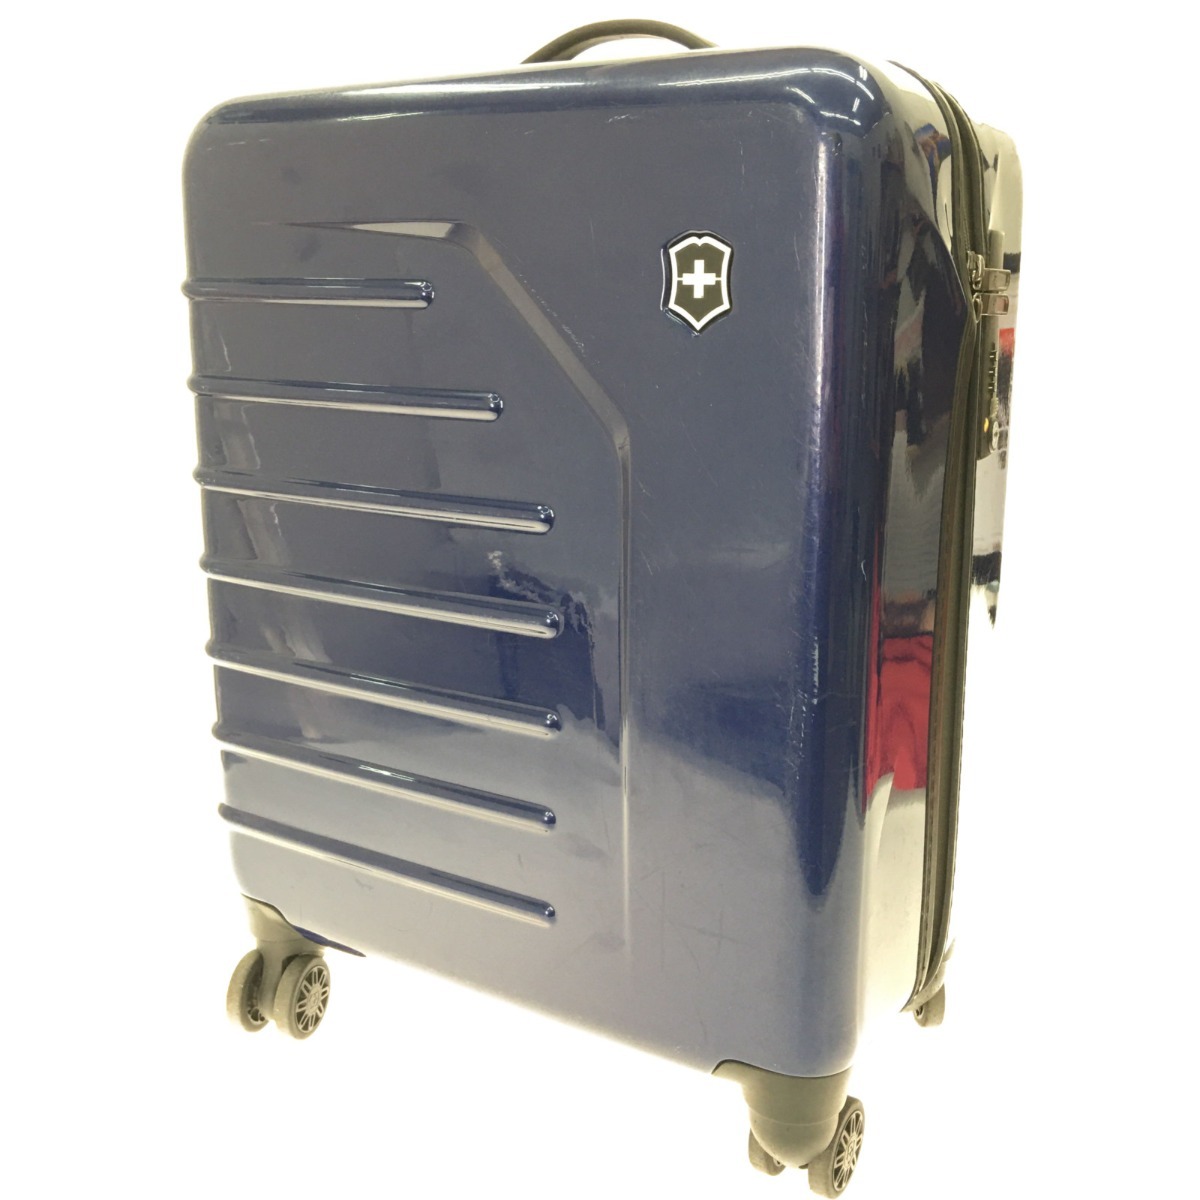 ▼▼ VICTORINOX ビクトリノックス キャリーケース キャリーバッグ スーツケース KMU-B512G ネイビー やや傷や汚れあり